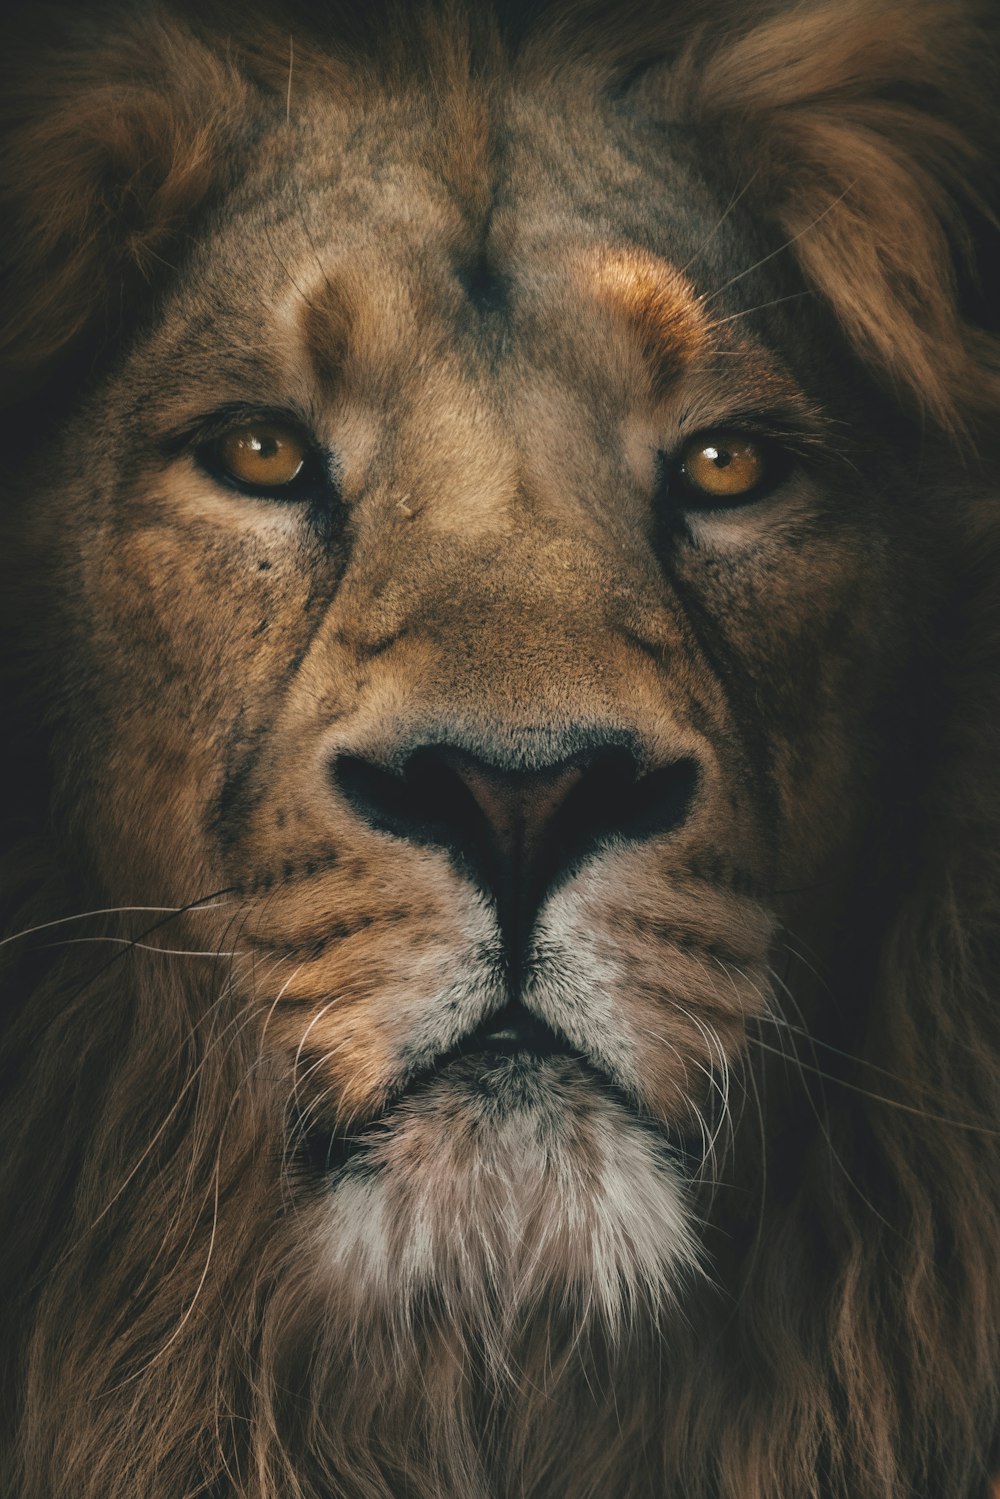 Lion Wallpapers: Descarga HD gratuita [500+ HQ] | Unsplash